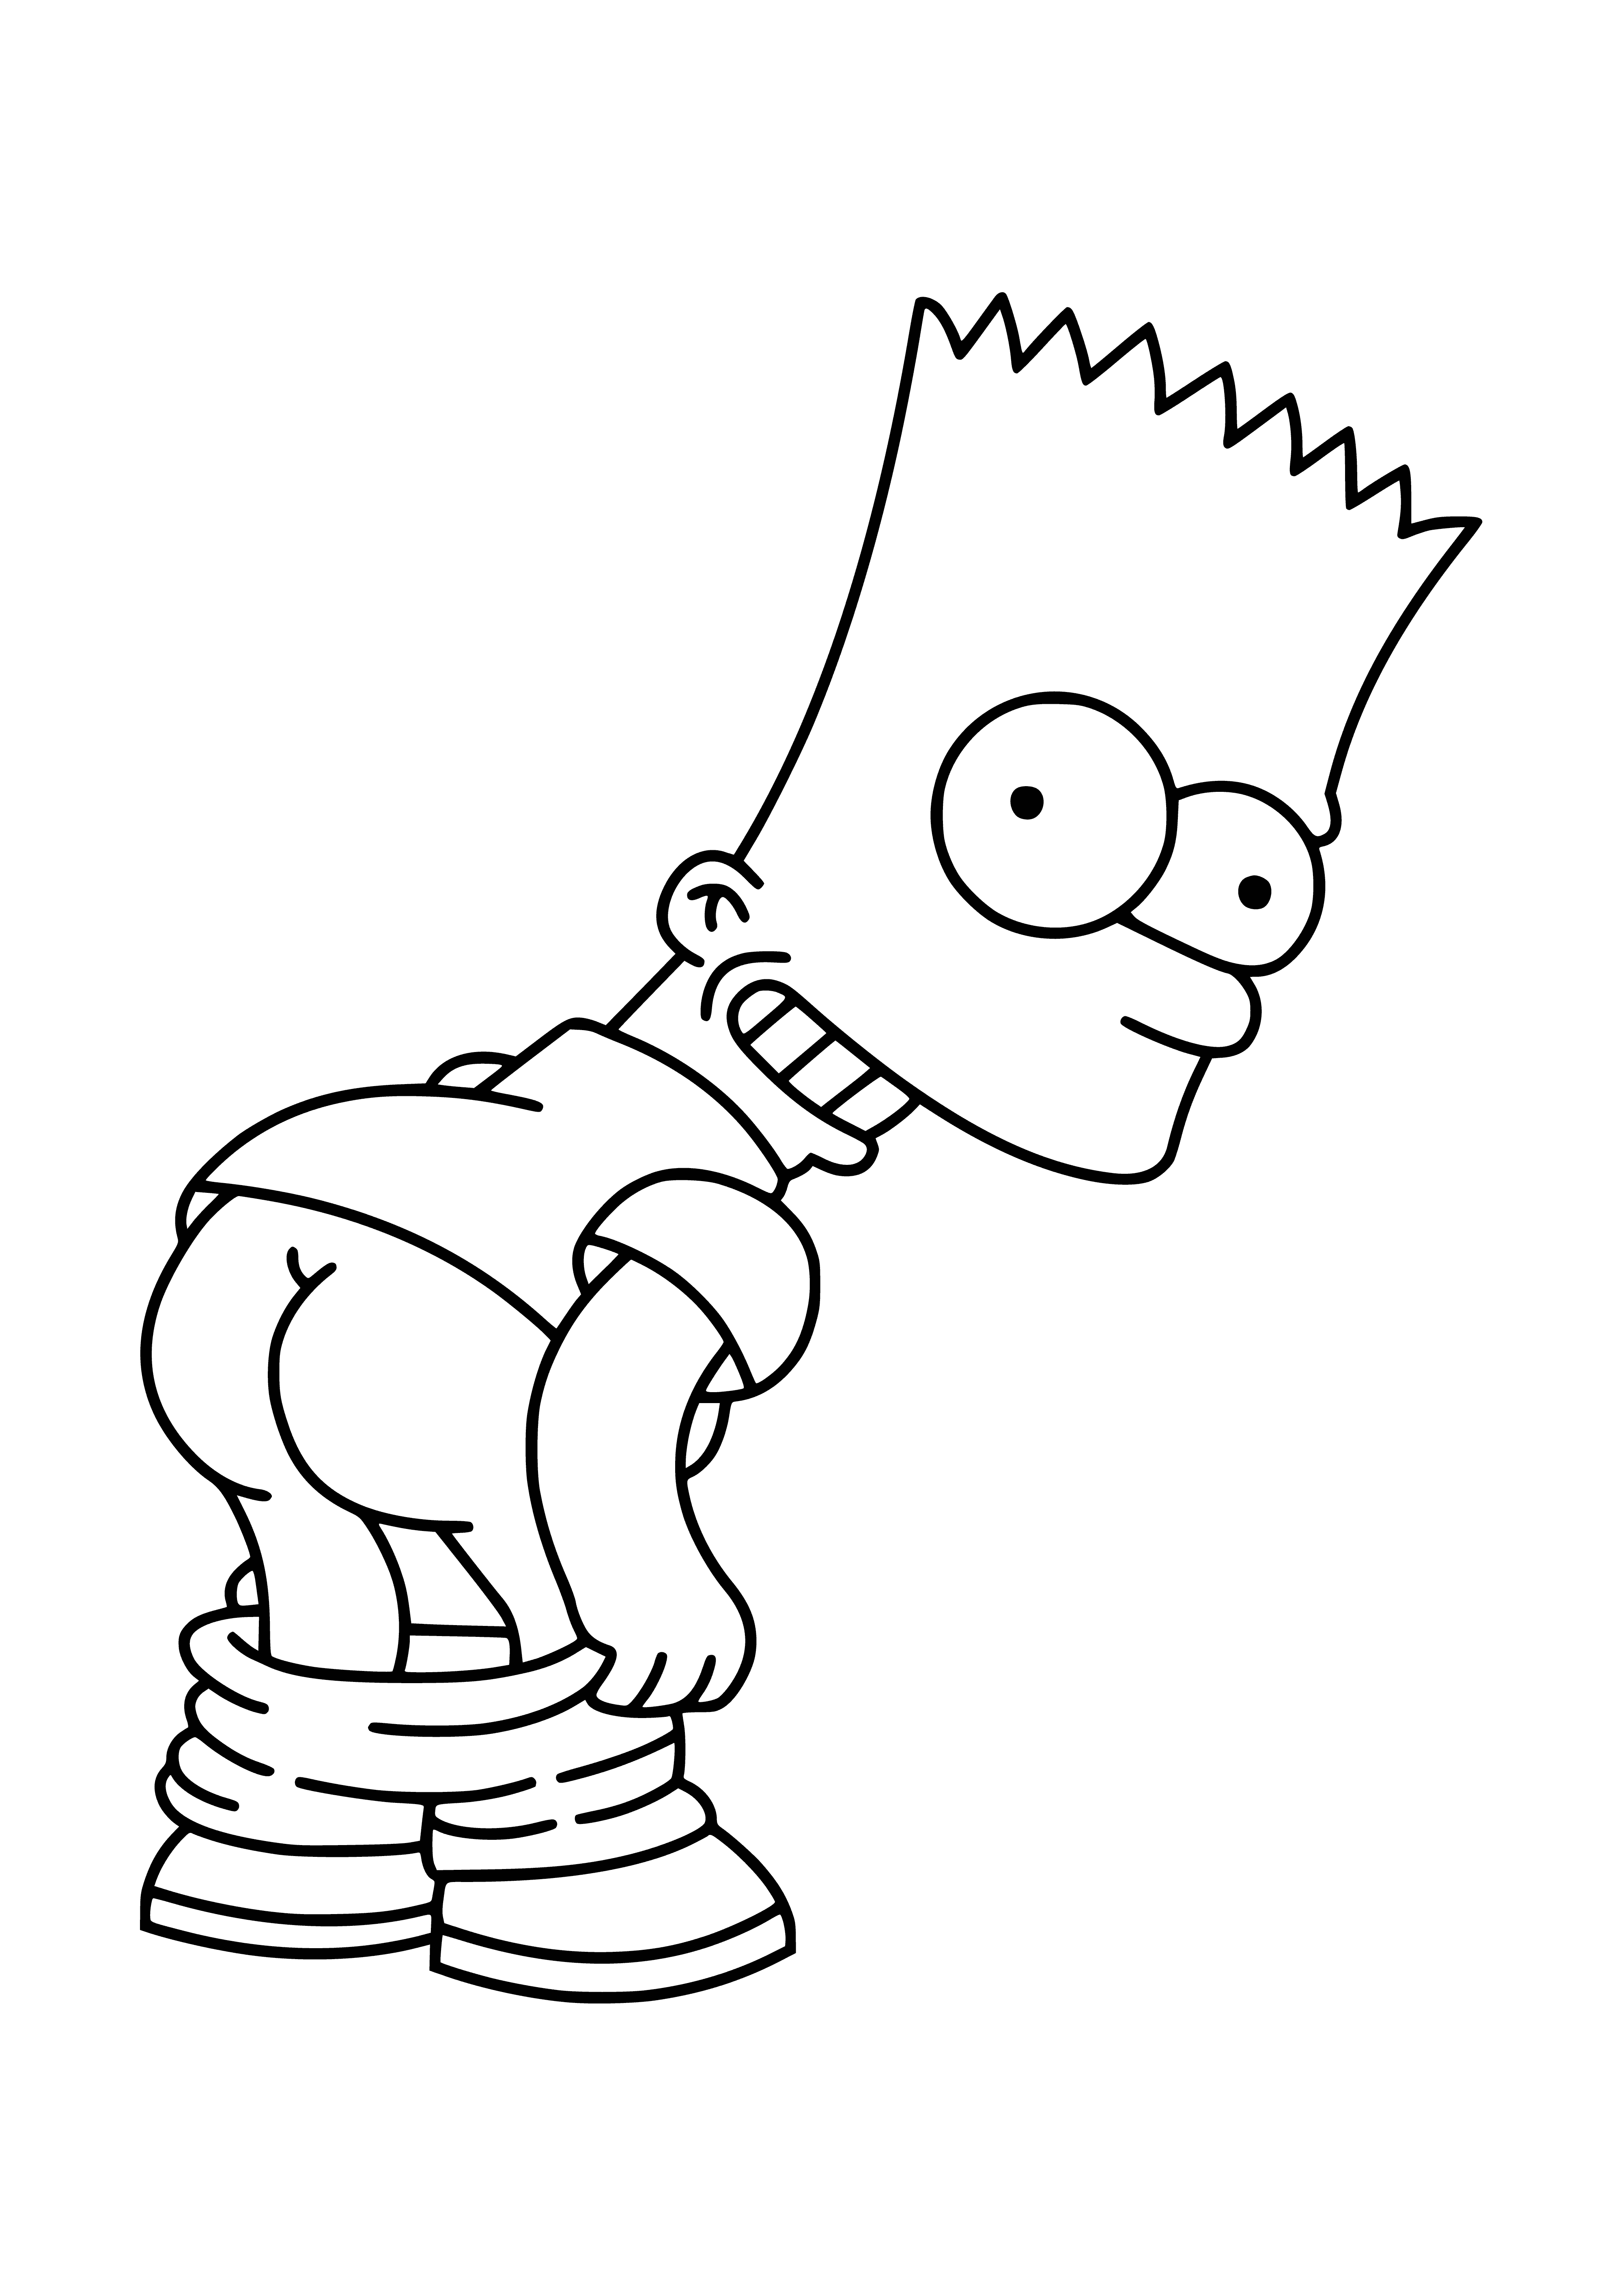 Барт симпсон легкий рисунок